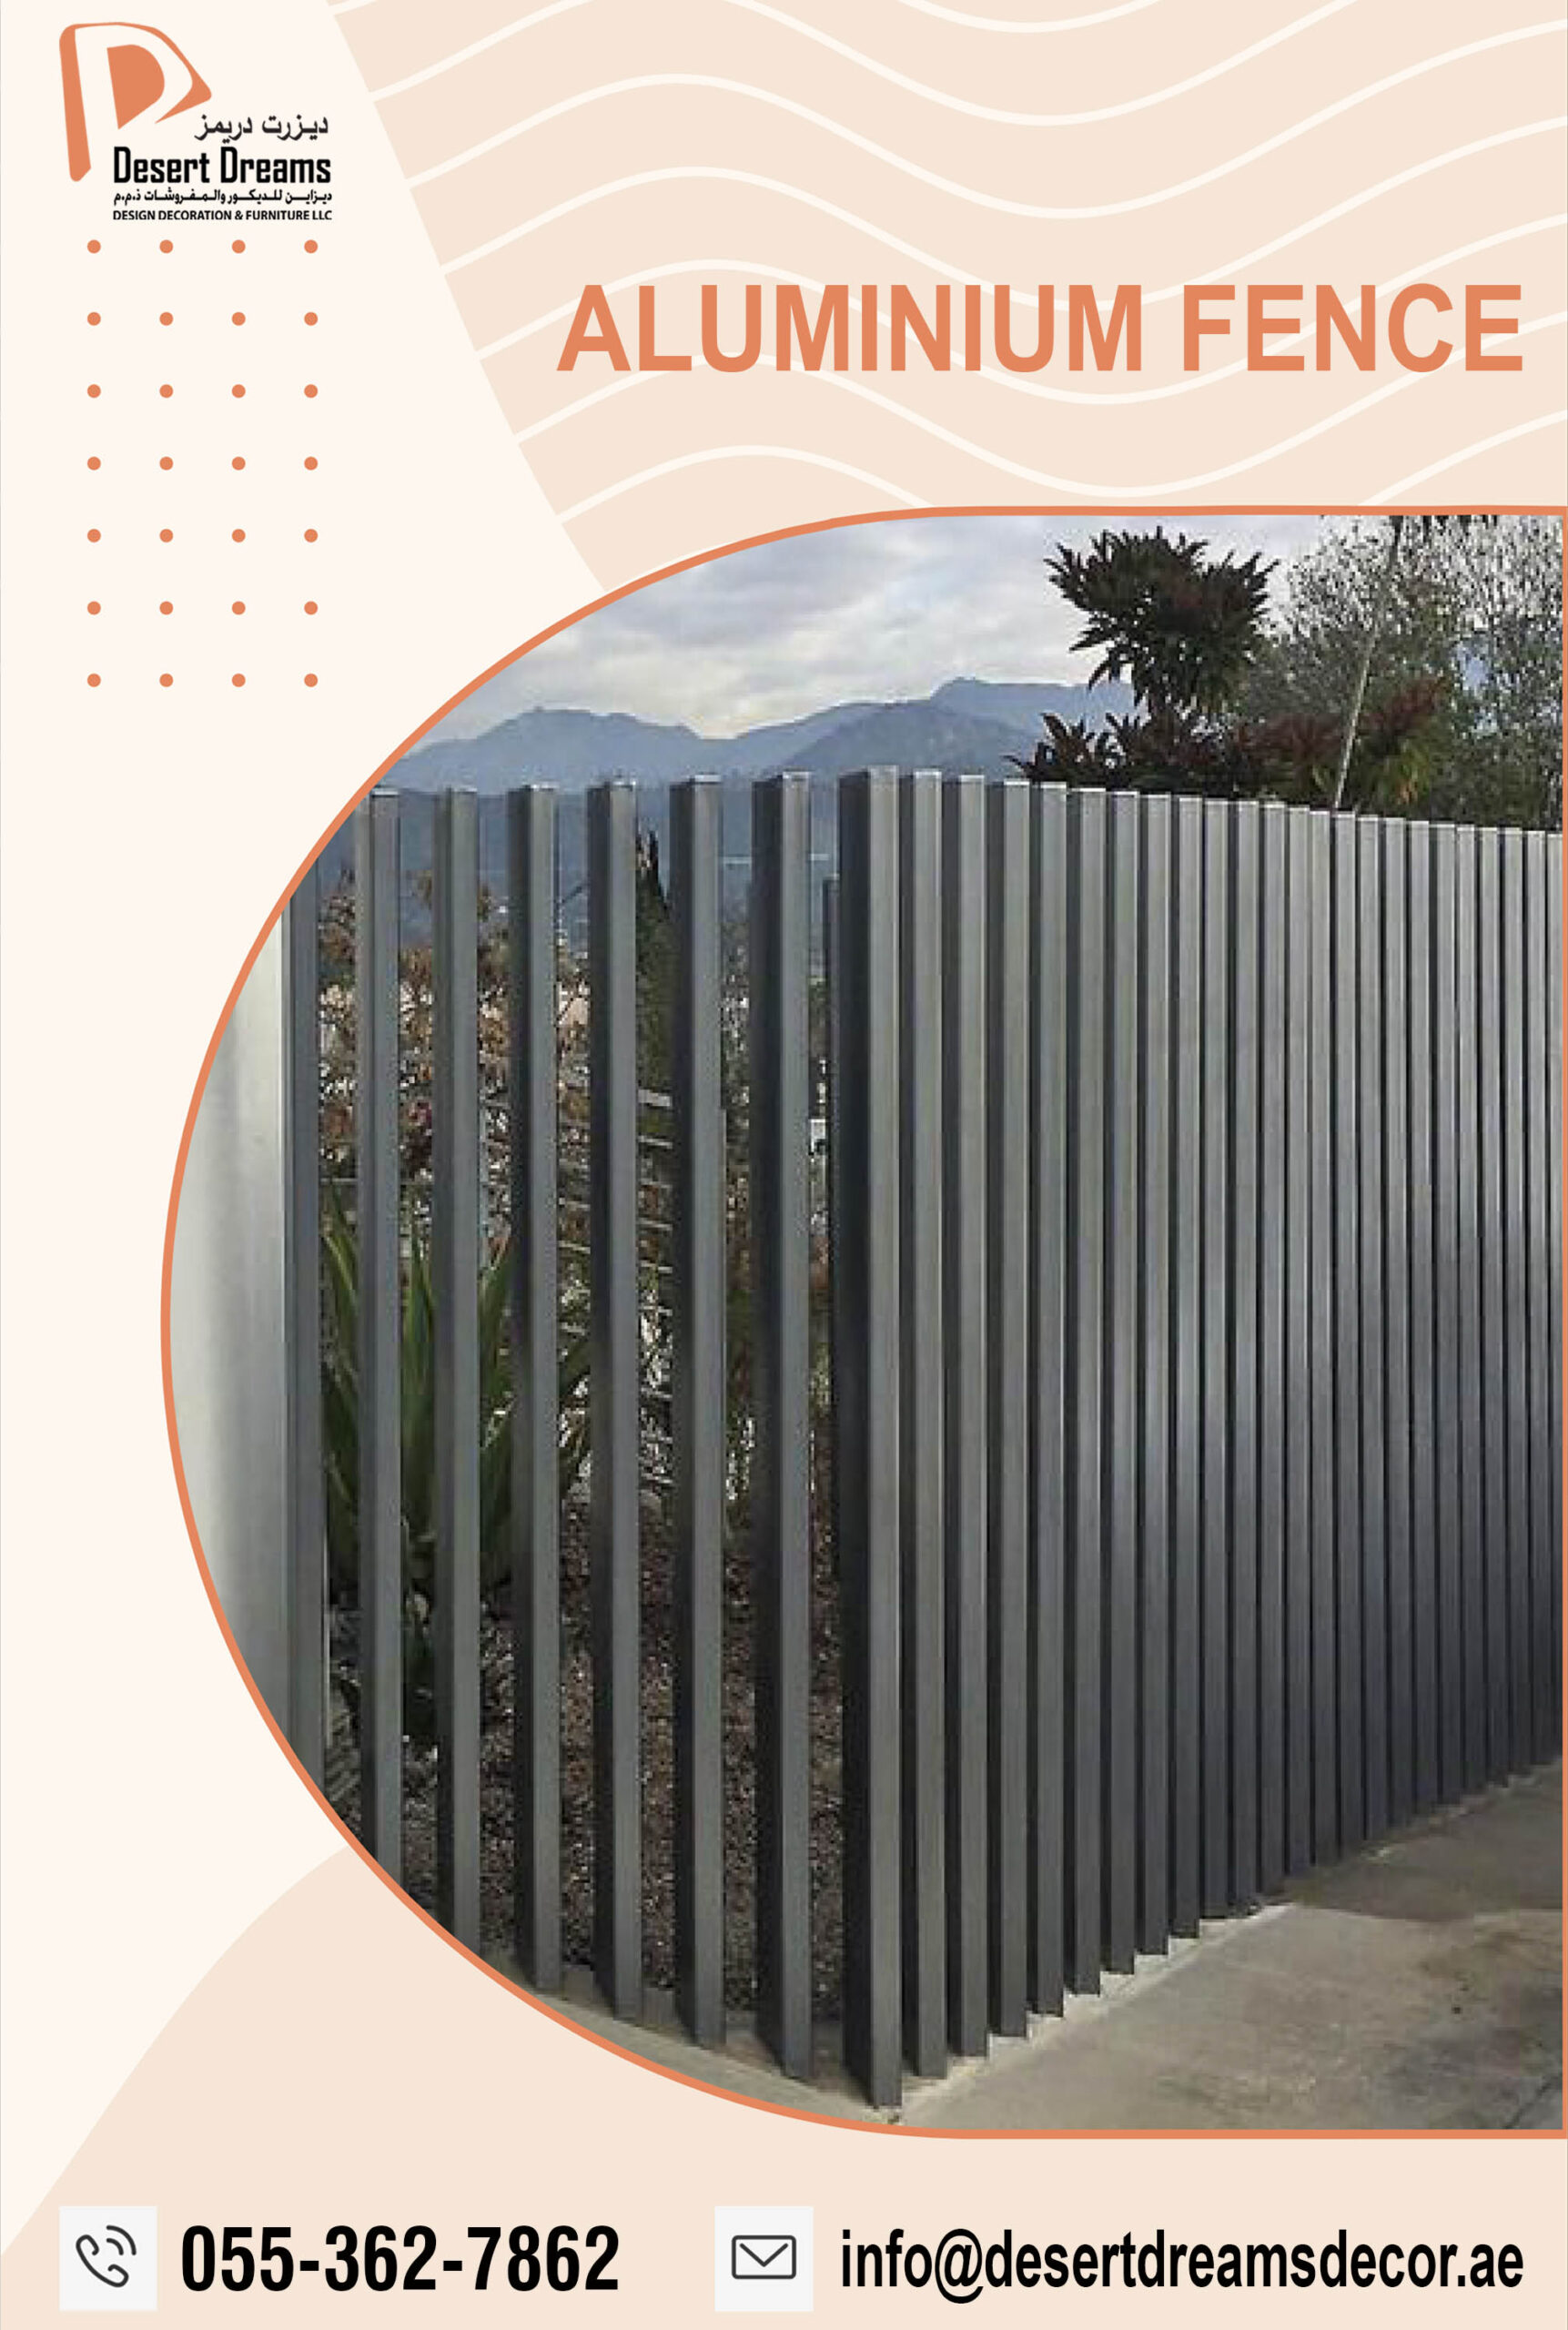 Aluminium fence dubai, aluminium fence uae, aluminium fence abu dhabi (4).jpg